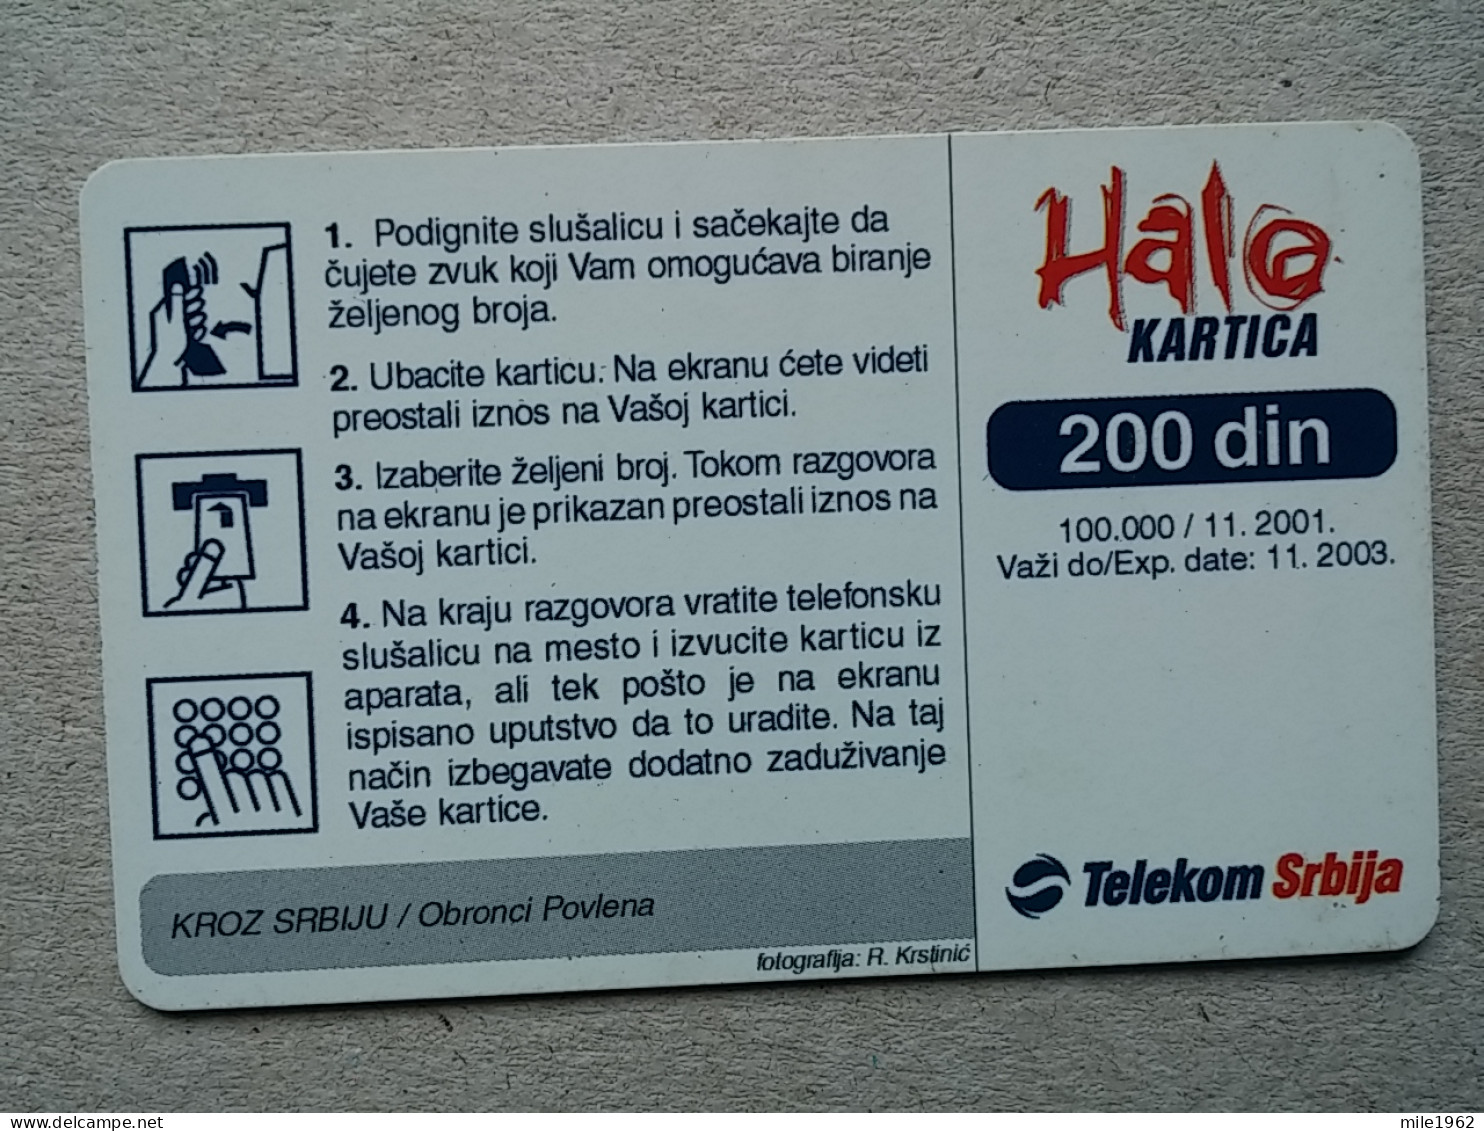 T-566 - SERBIA, Telecard, Télécarte, Phonecard, Halo Kartica - Jugoslavia